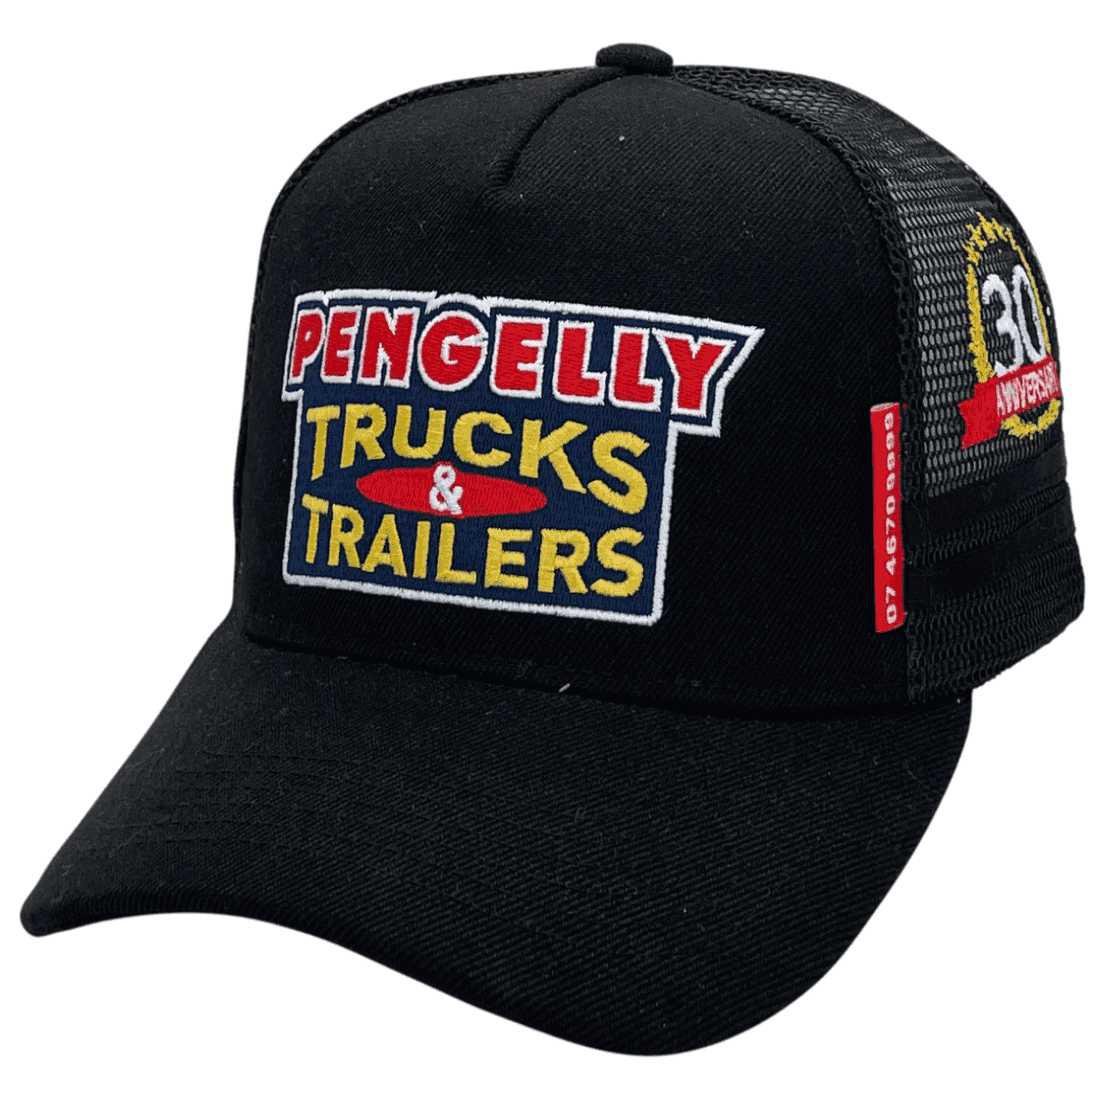 Pengelly Trucks & Trailers LP Basic Aussie Trucker Hats Acrylic Black